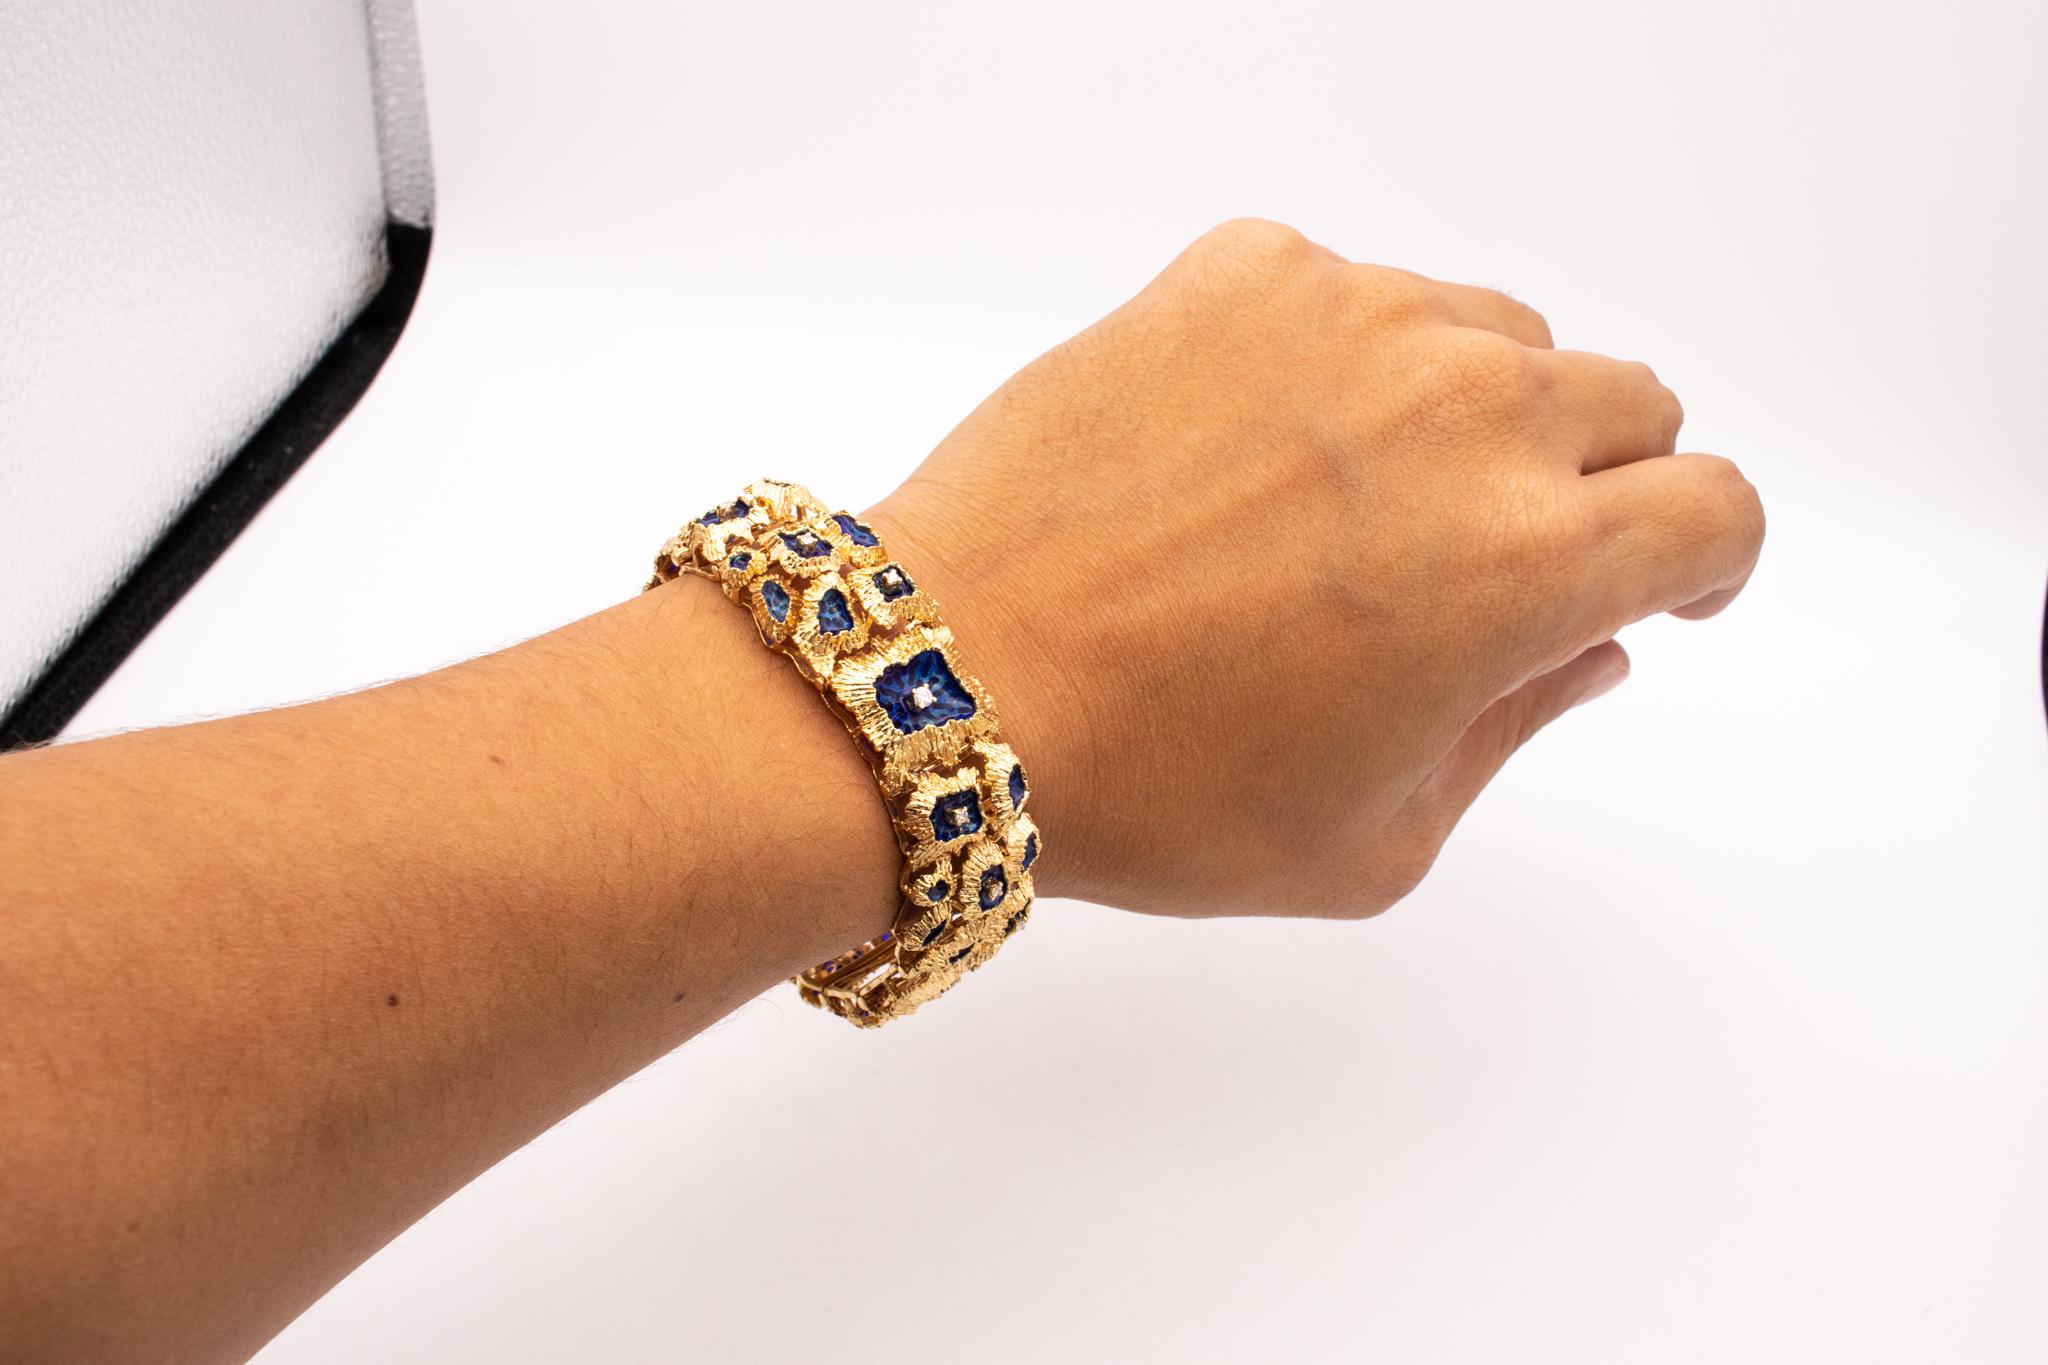 Modernist Italian Plique a Jour Brutalist Bracelet in 18kt Gold Diamonds and Blue Enamel